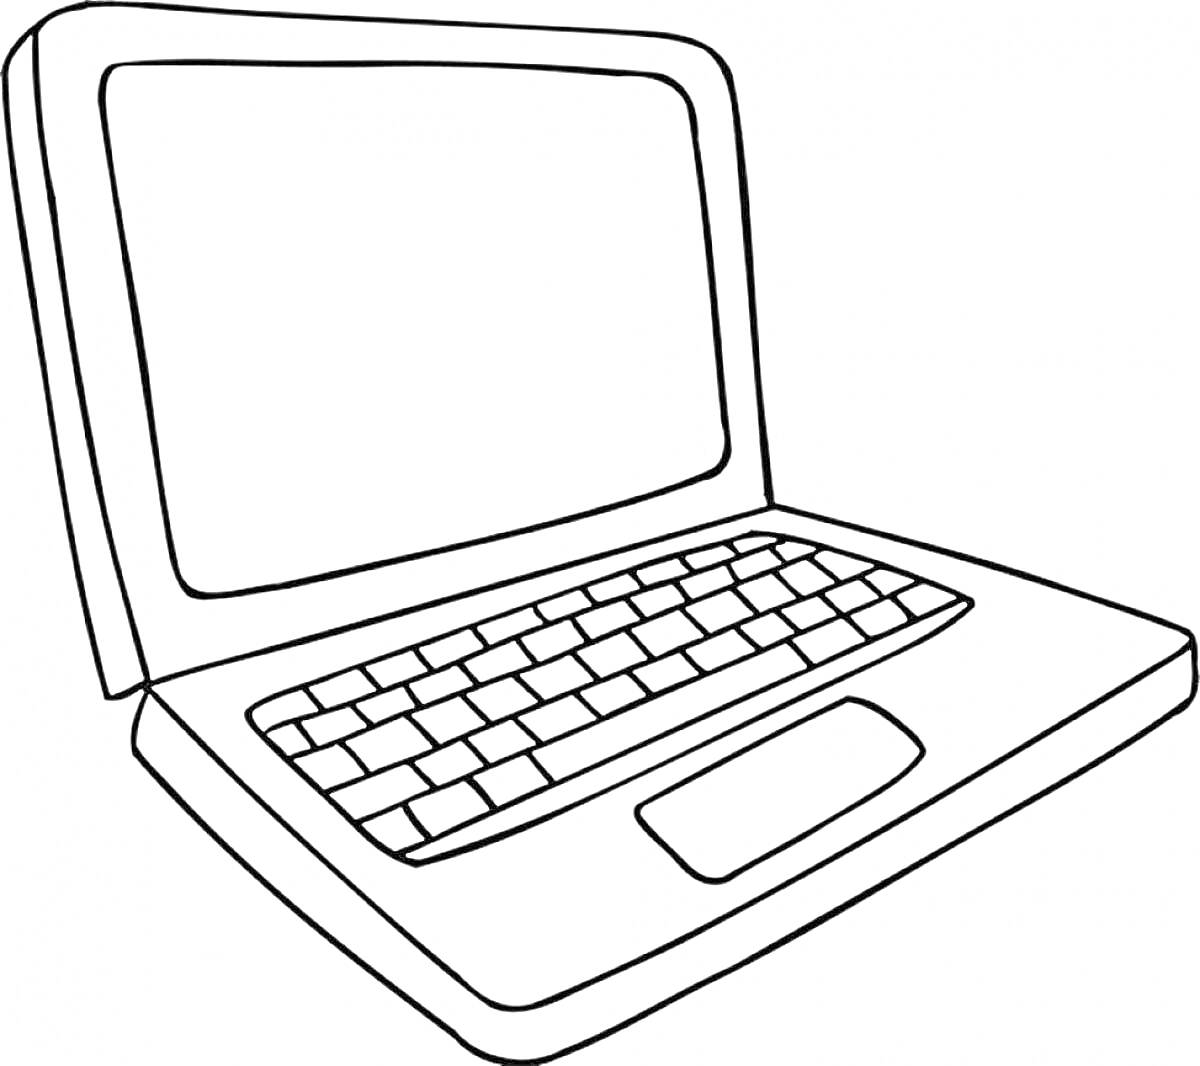 На раскраске изображено: Ноутбук, Компьютер, Клавиатура, Экран, Техника, Электроника, Для детей